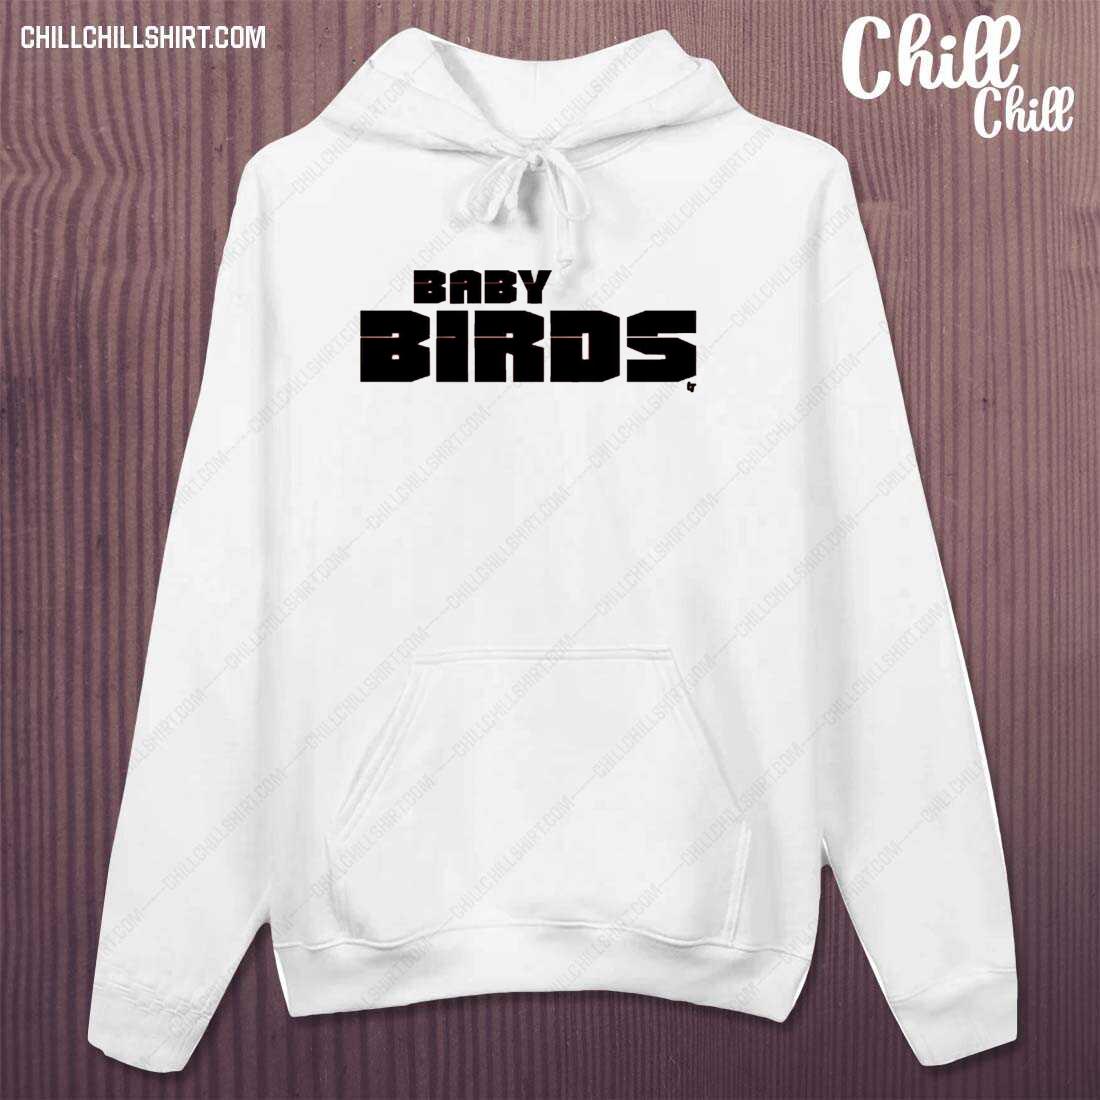 Nice baltimore Baseball Baby Birds T-s hoodie